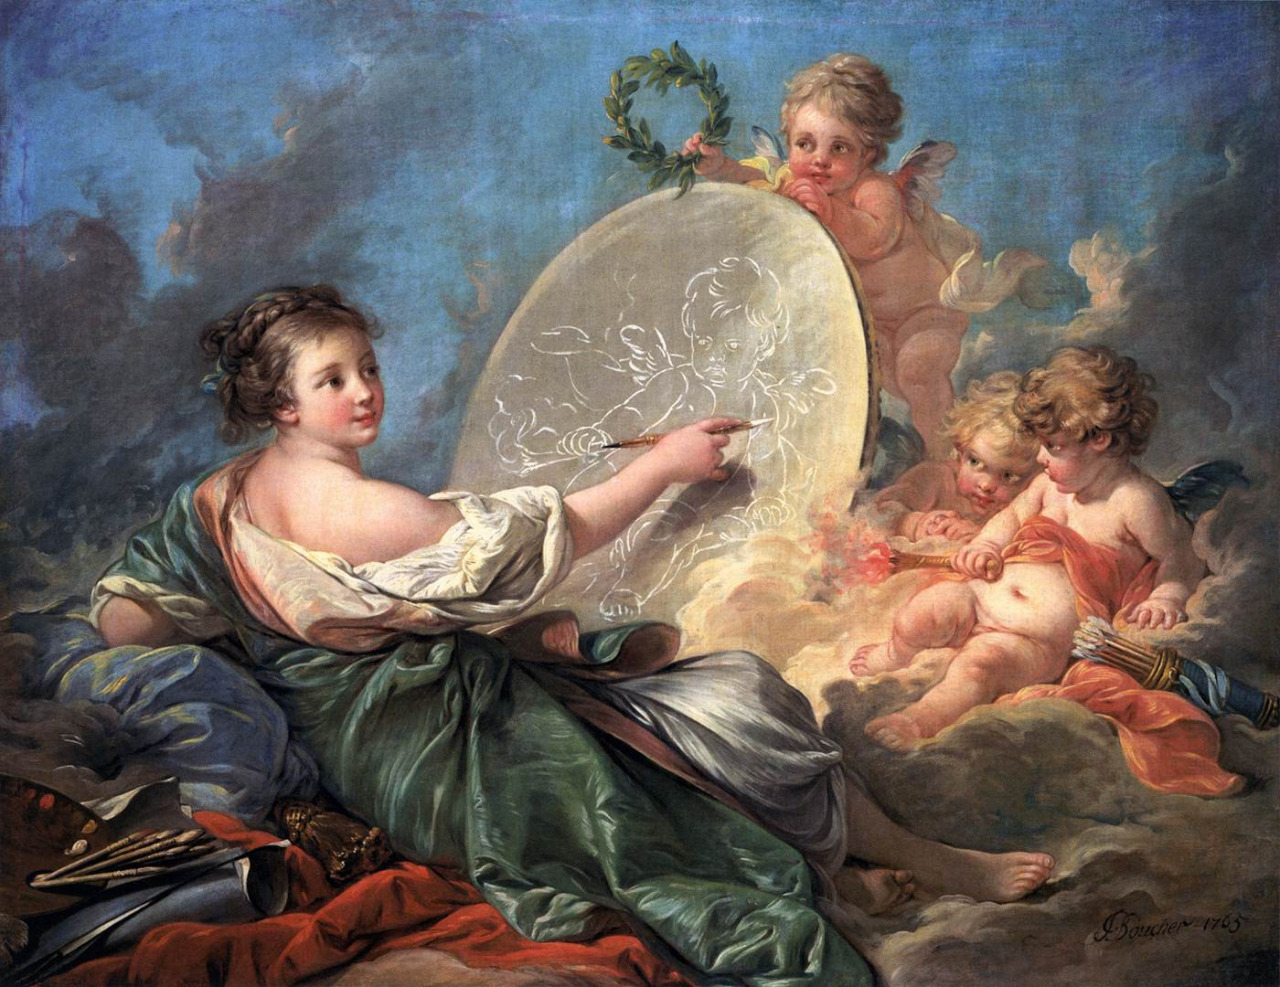 絵画の寓意 by Francois Boucher - 1765 - 101.5 x 130 cm  